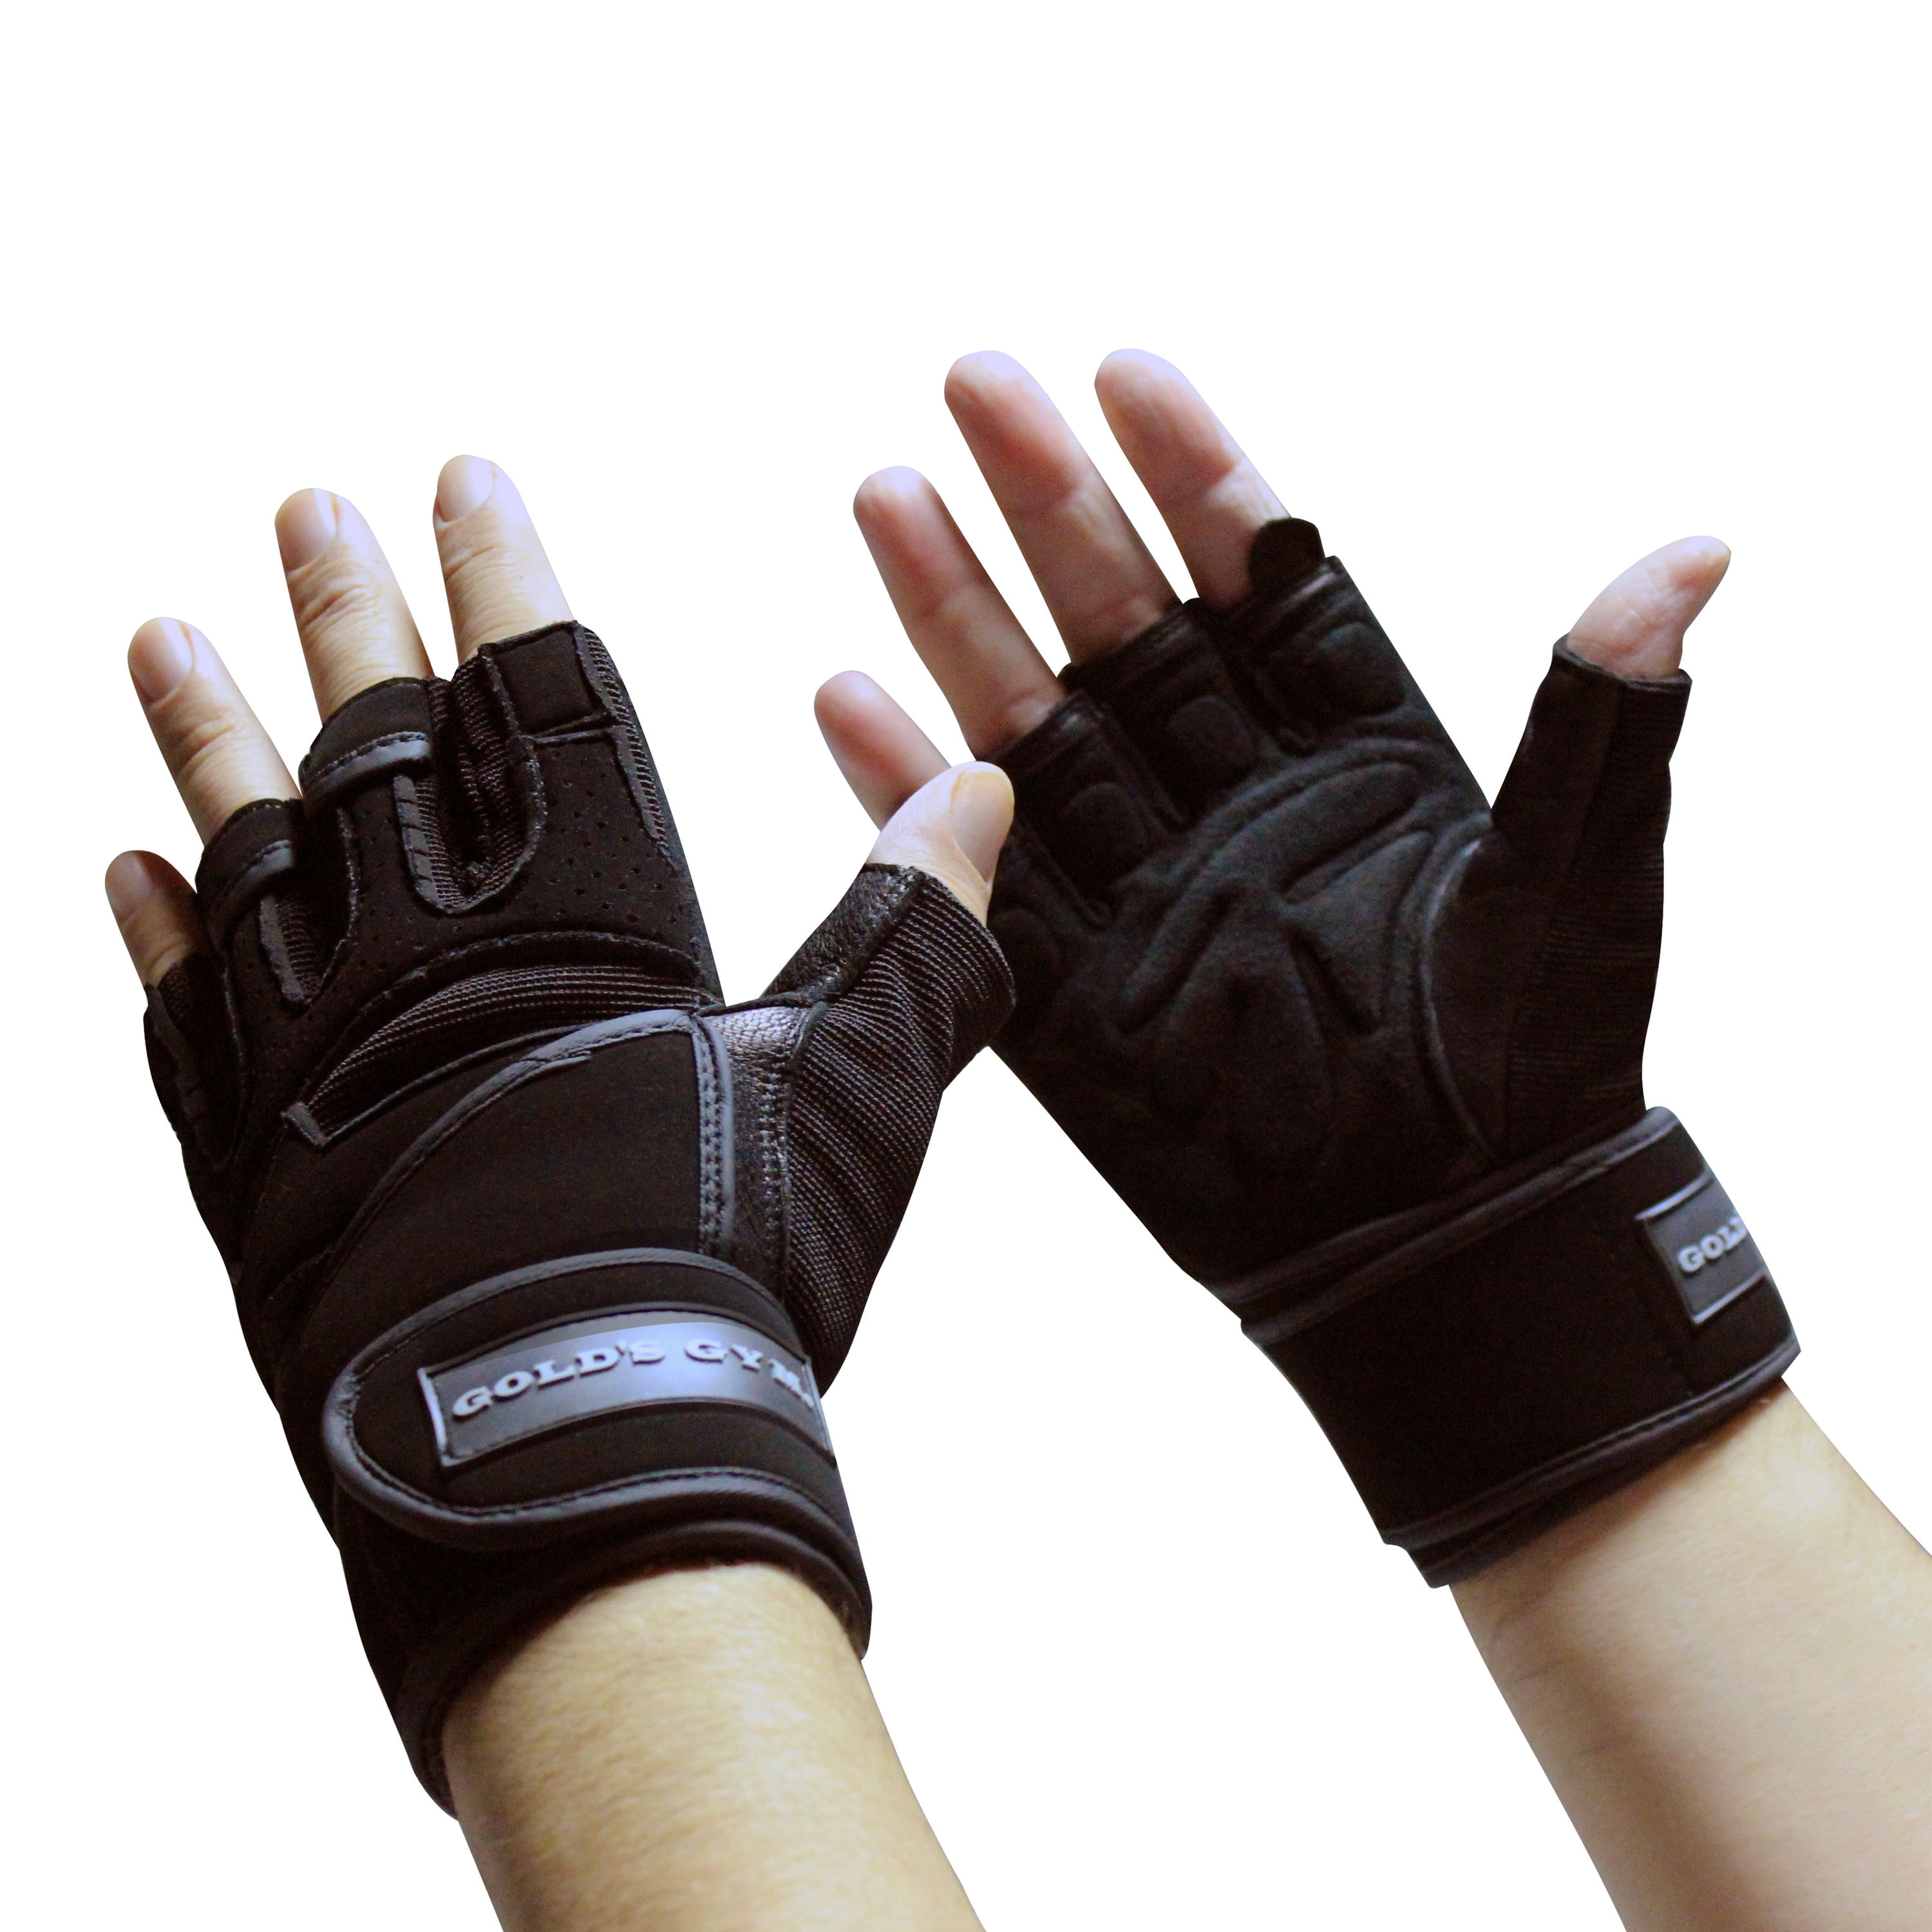 Details about   Gold's Gym Wrist wrap Weightlifting Adjustable Strap Gloves black color XS,S,M.L 